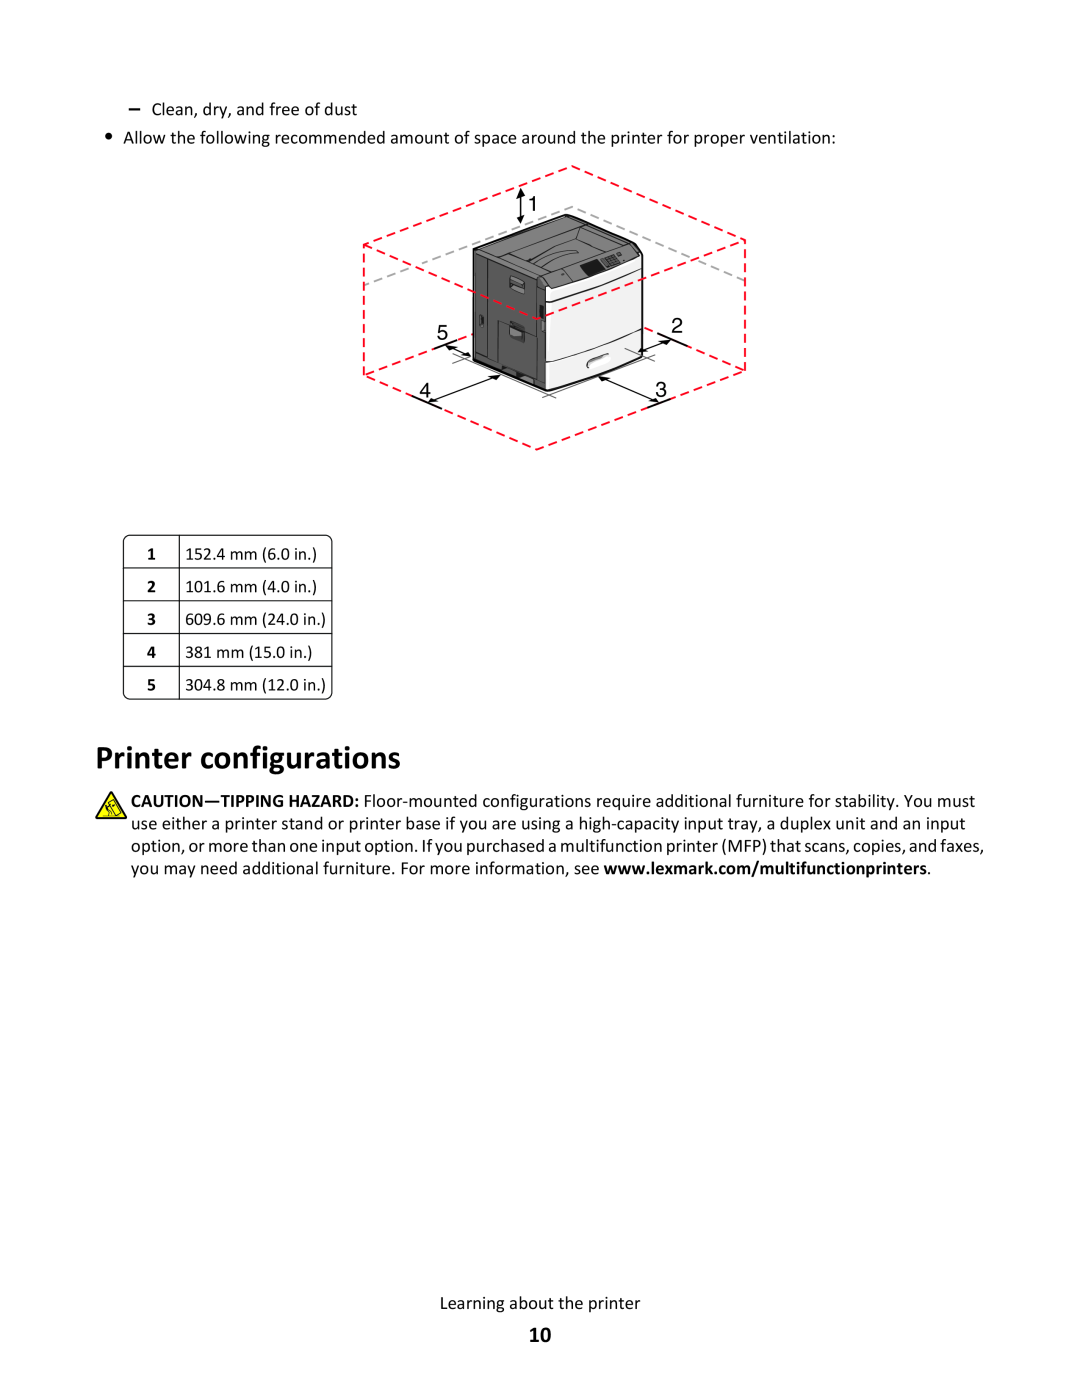 Lexmark C790 Printer configurations, 152.4 mm 6.0 in 101.6 mm 4.0 in 609.6 mm 24.0 in. 381 mm 15.0 in, 304.8 mm 12.0 in 